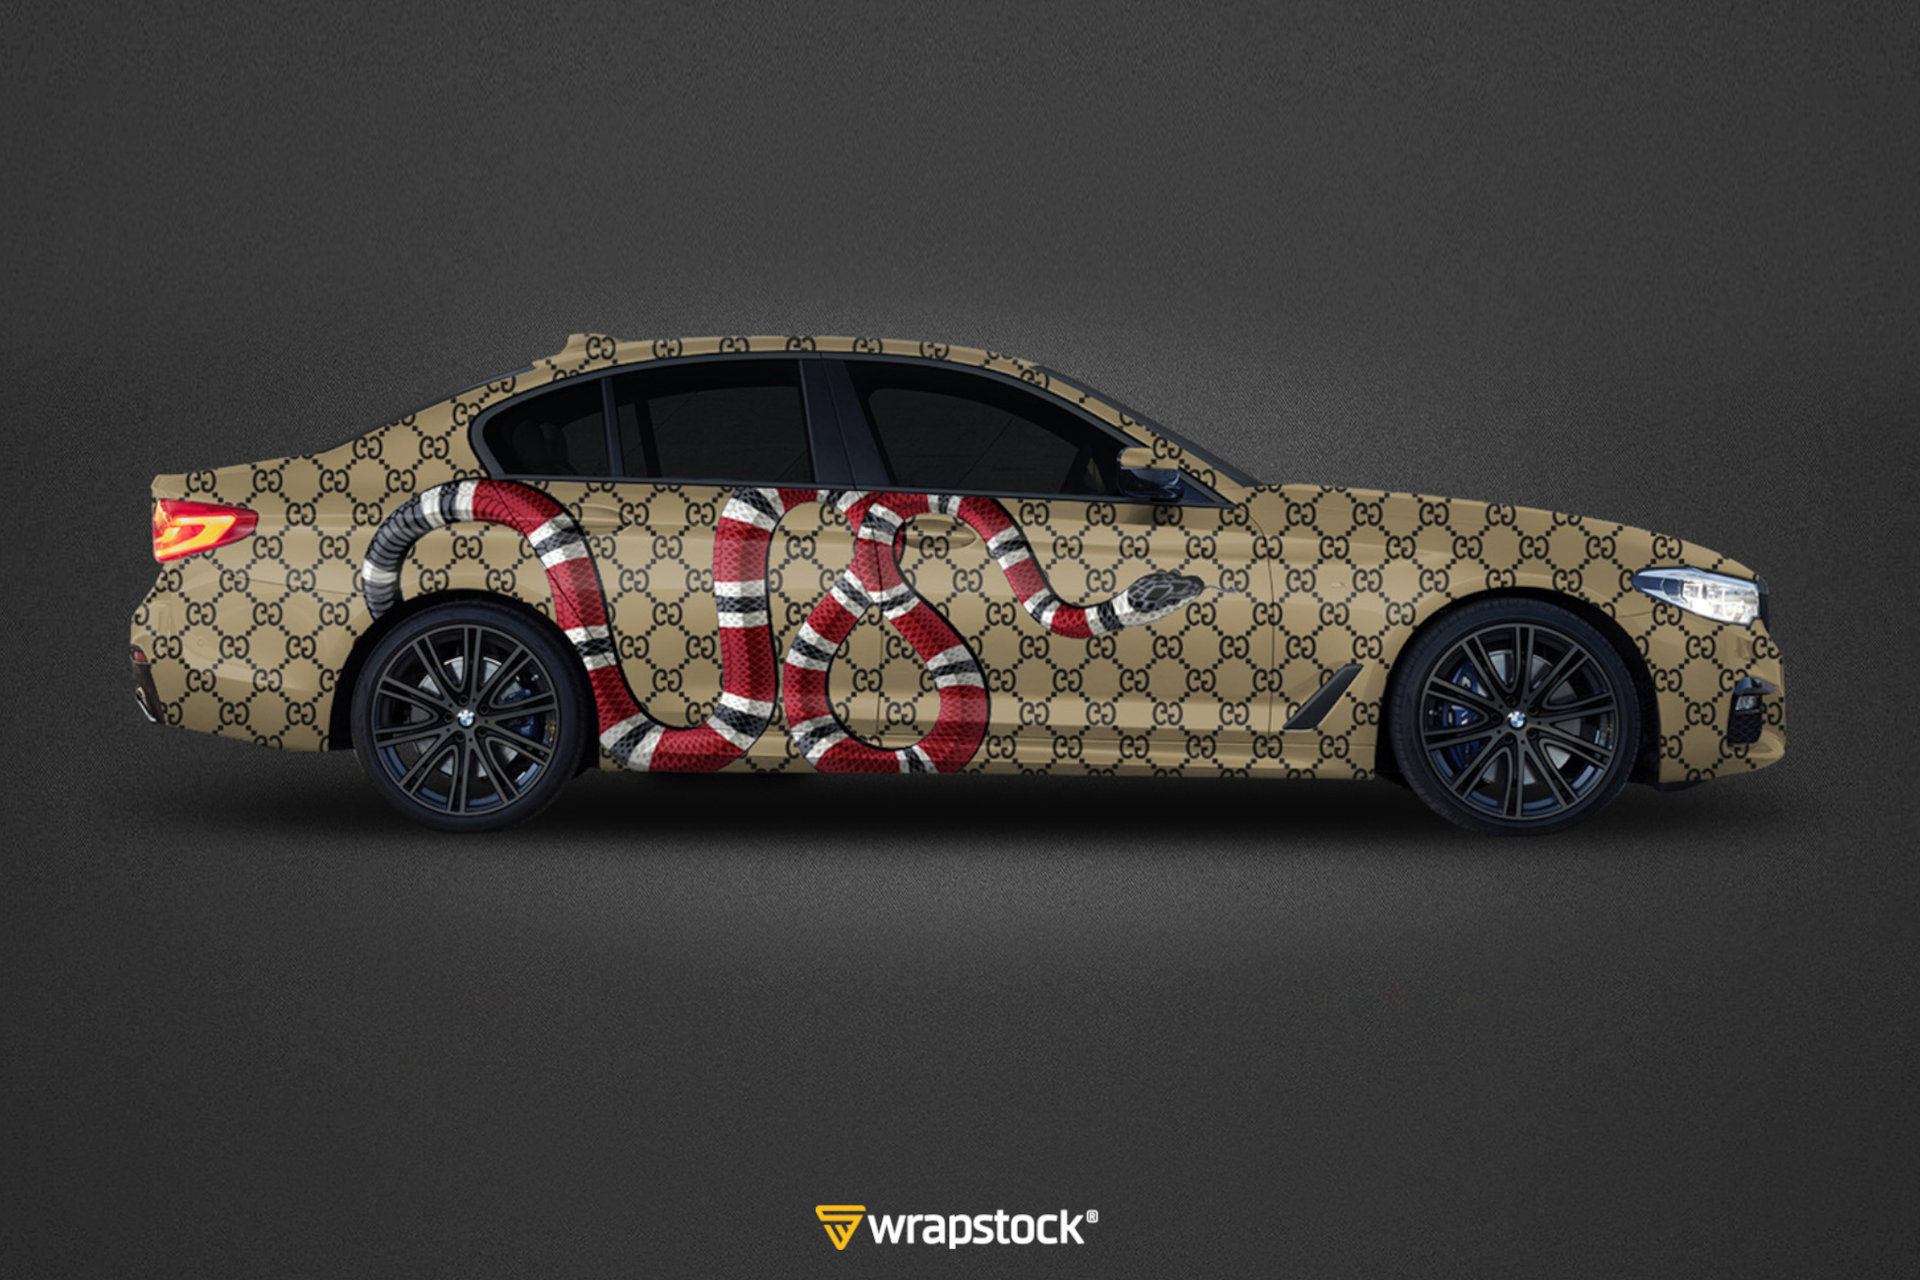 BMW 540i - Gucci Design | WrapStyle